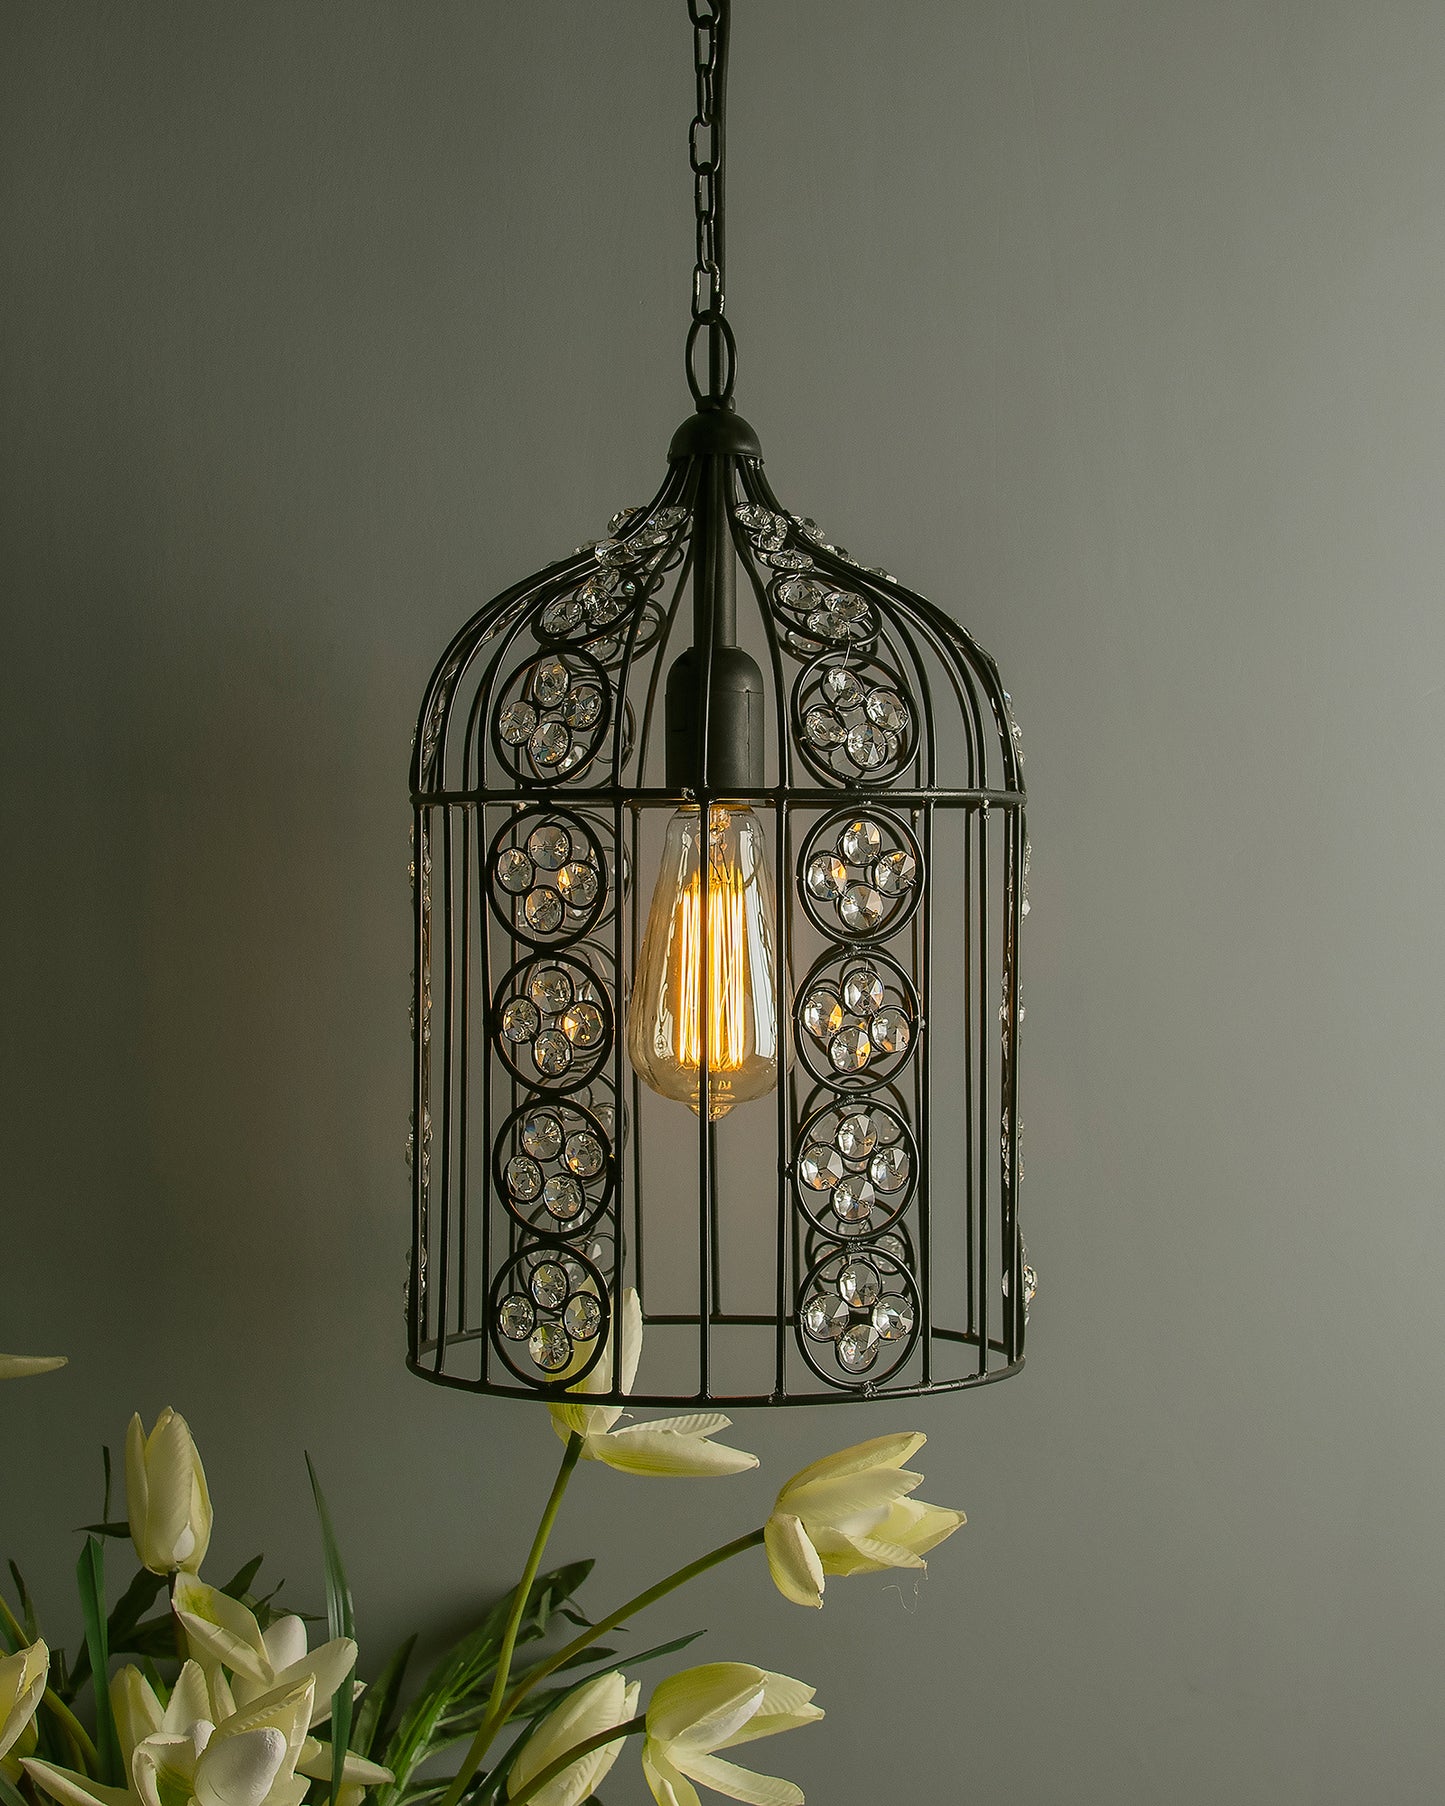 Crystal Bird Cage Chandelier Lighting Black Bronze Iron Chandelier Ceiling Light Fixture, Hanging Lamp with Filament Bulb